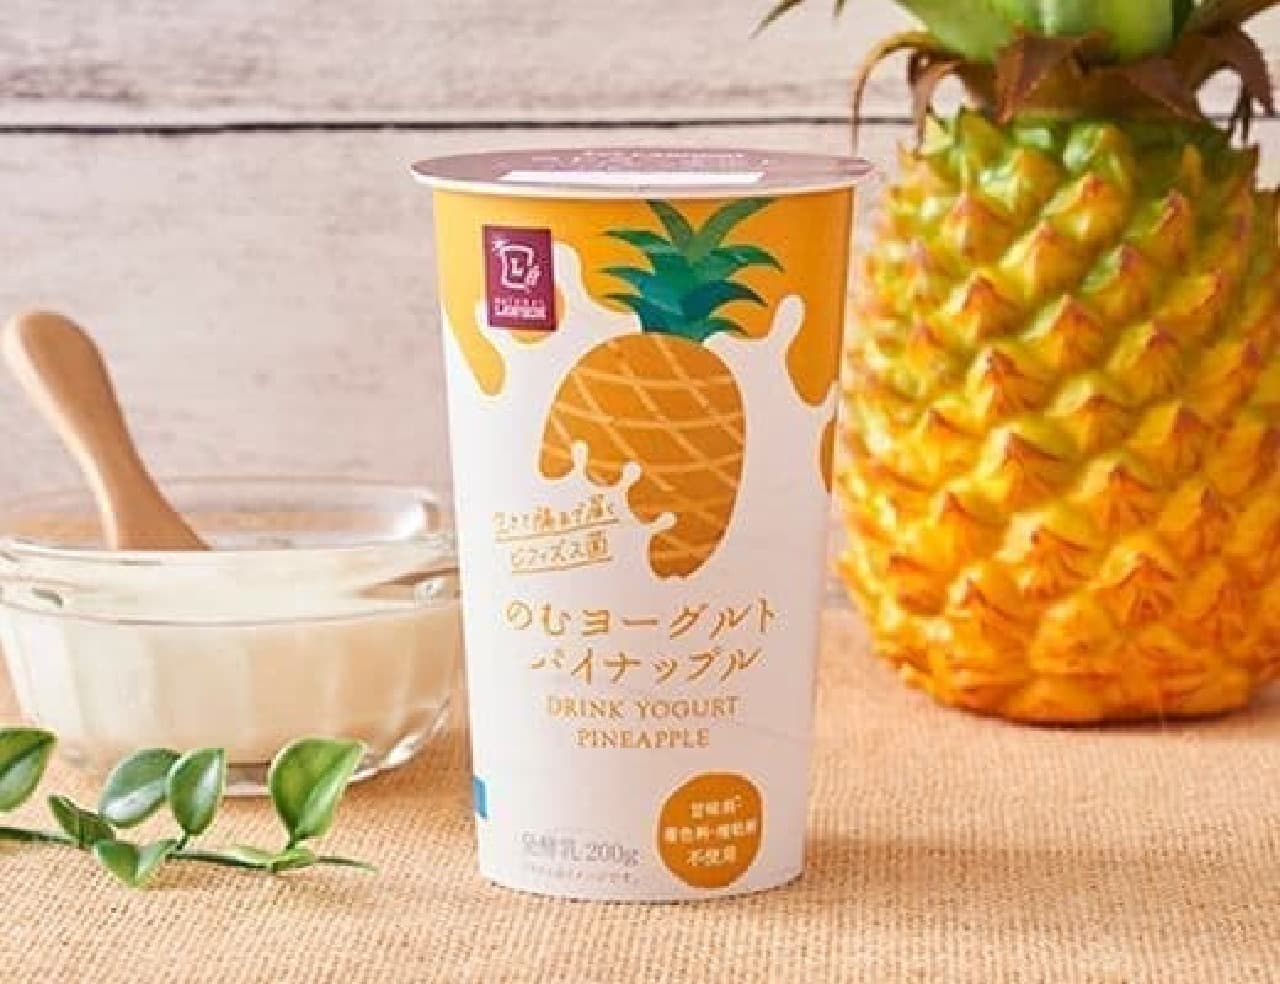 Lawson "NL Nomu Yogurt Pineapple 200g"